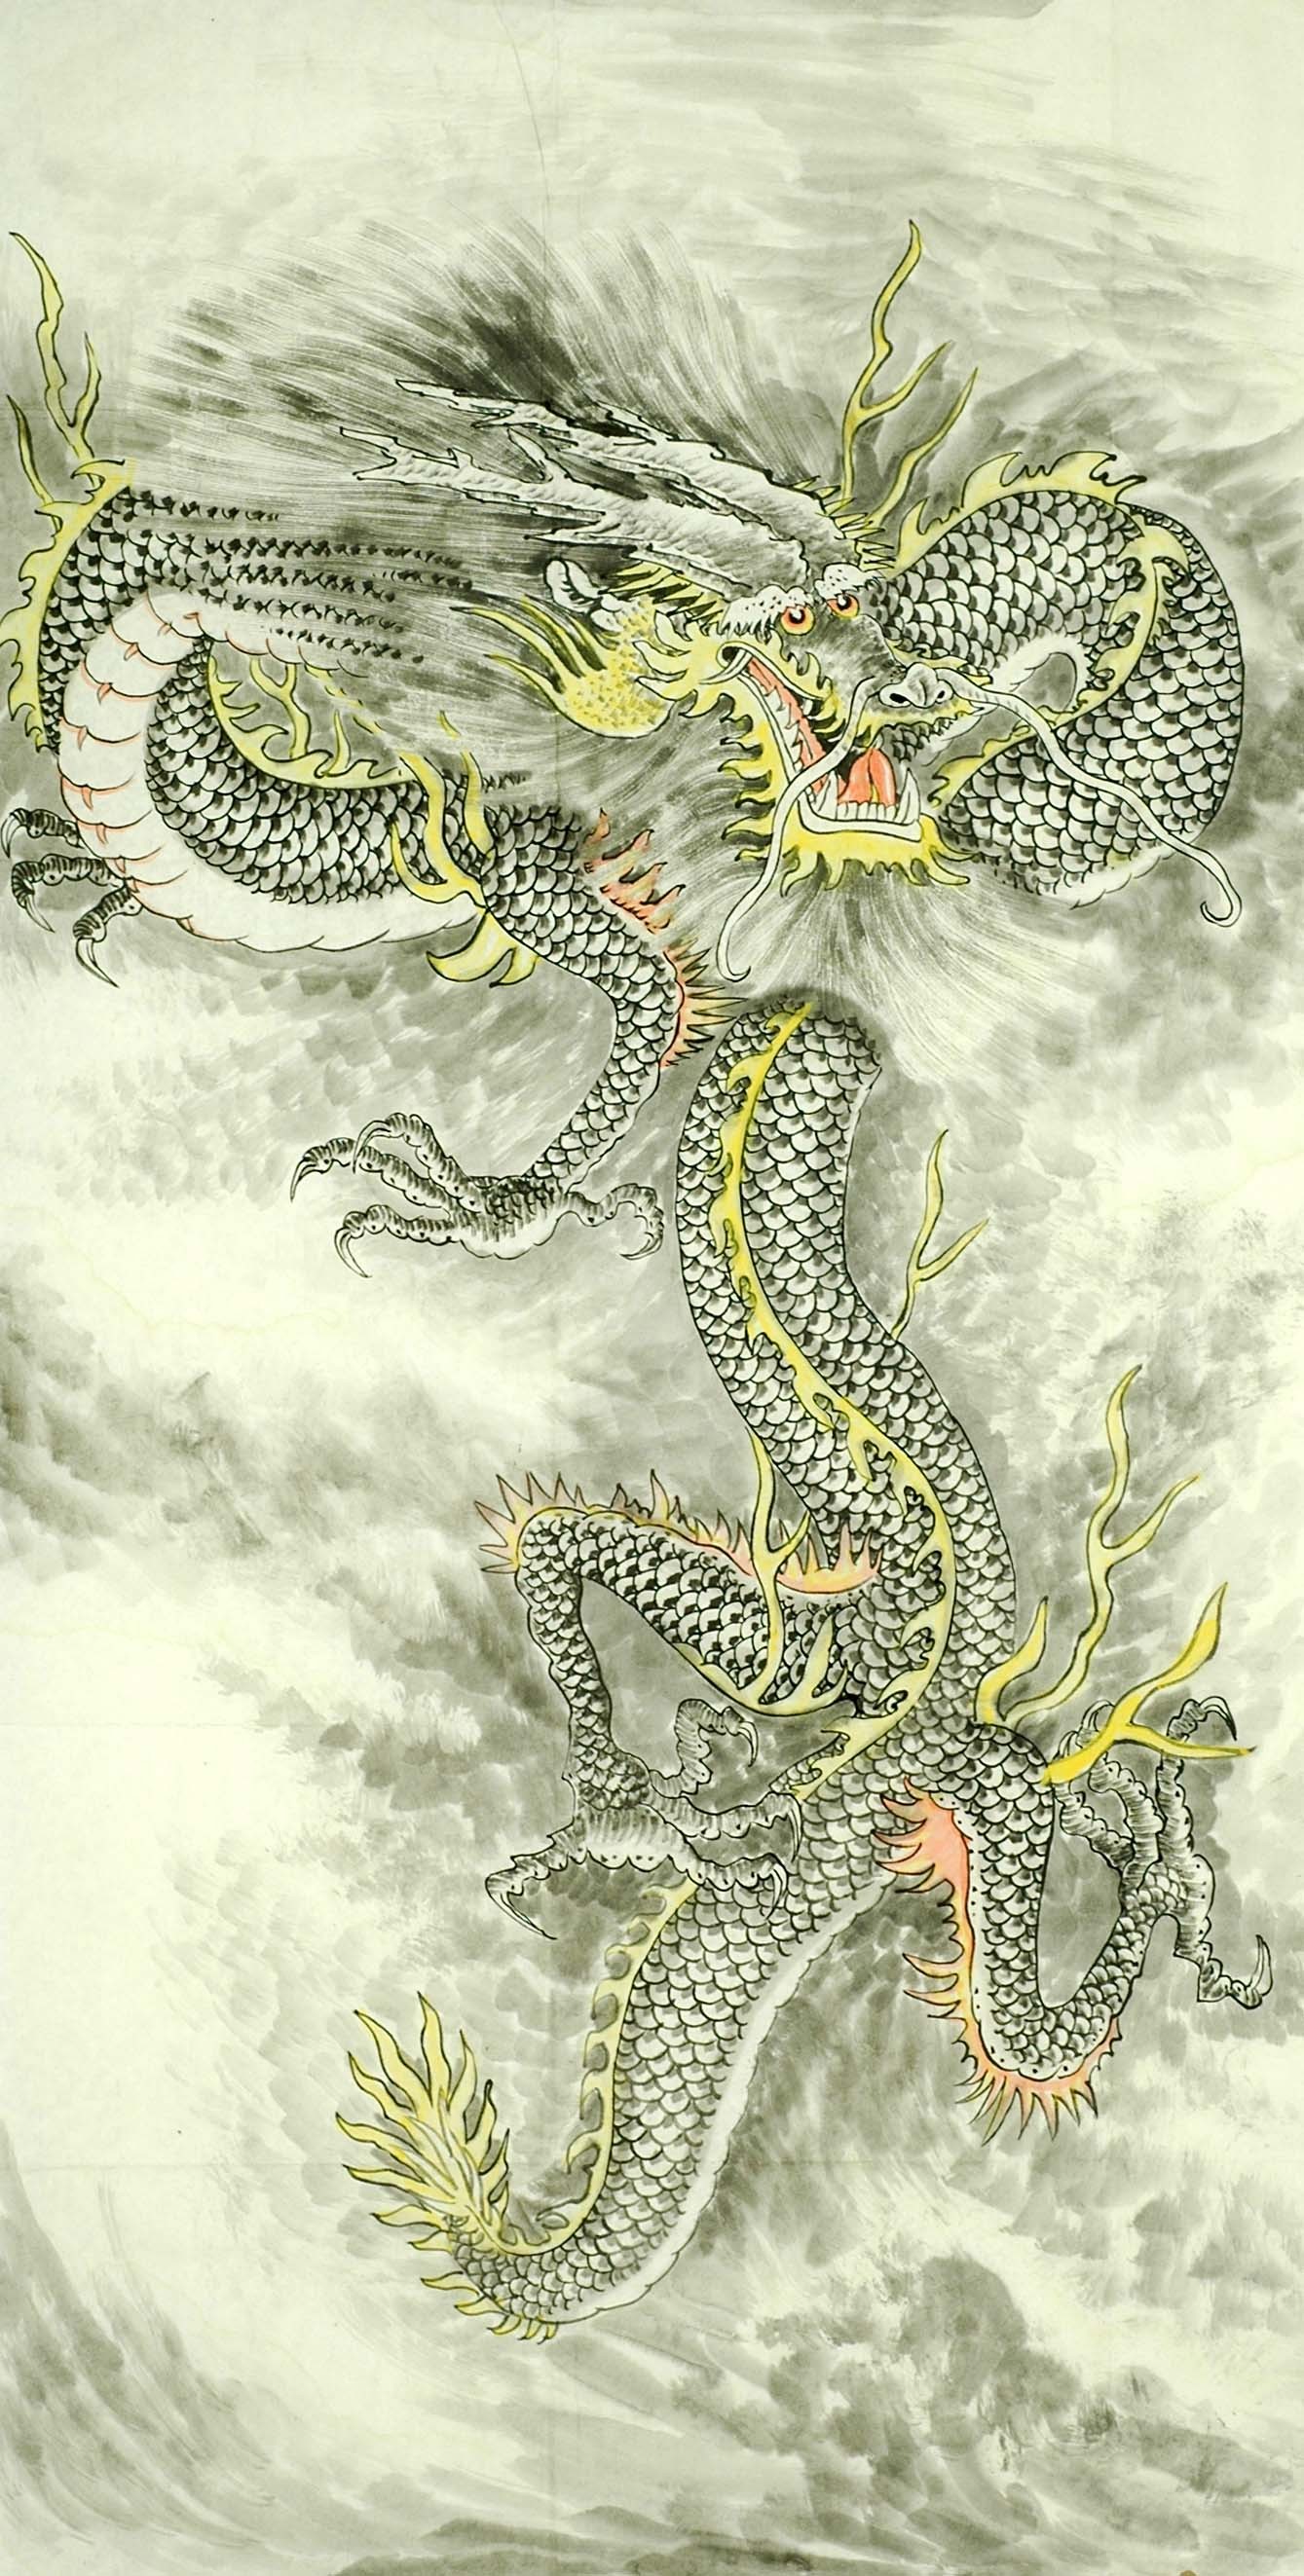 Chinese Dragon Painting - CNAG008725